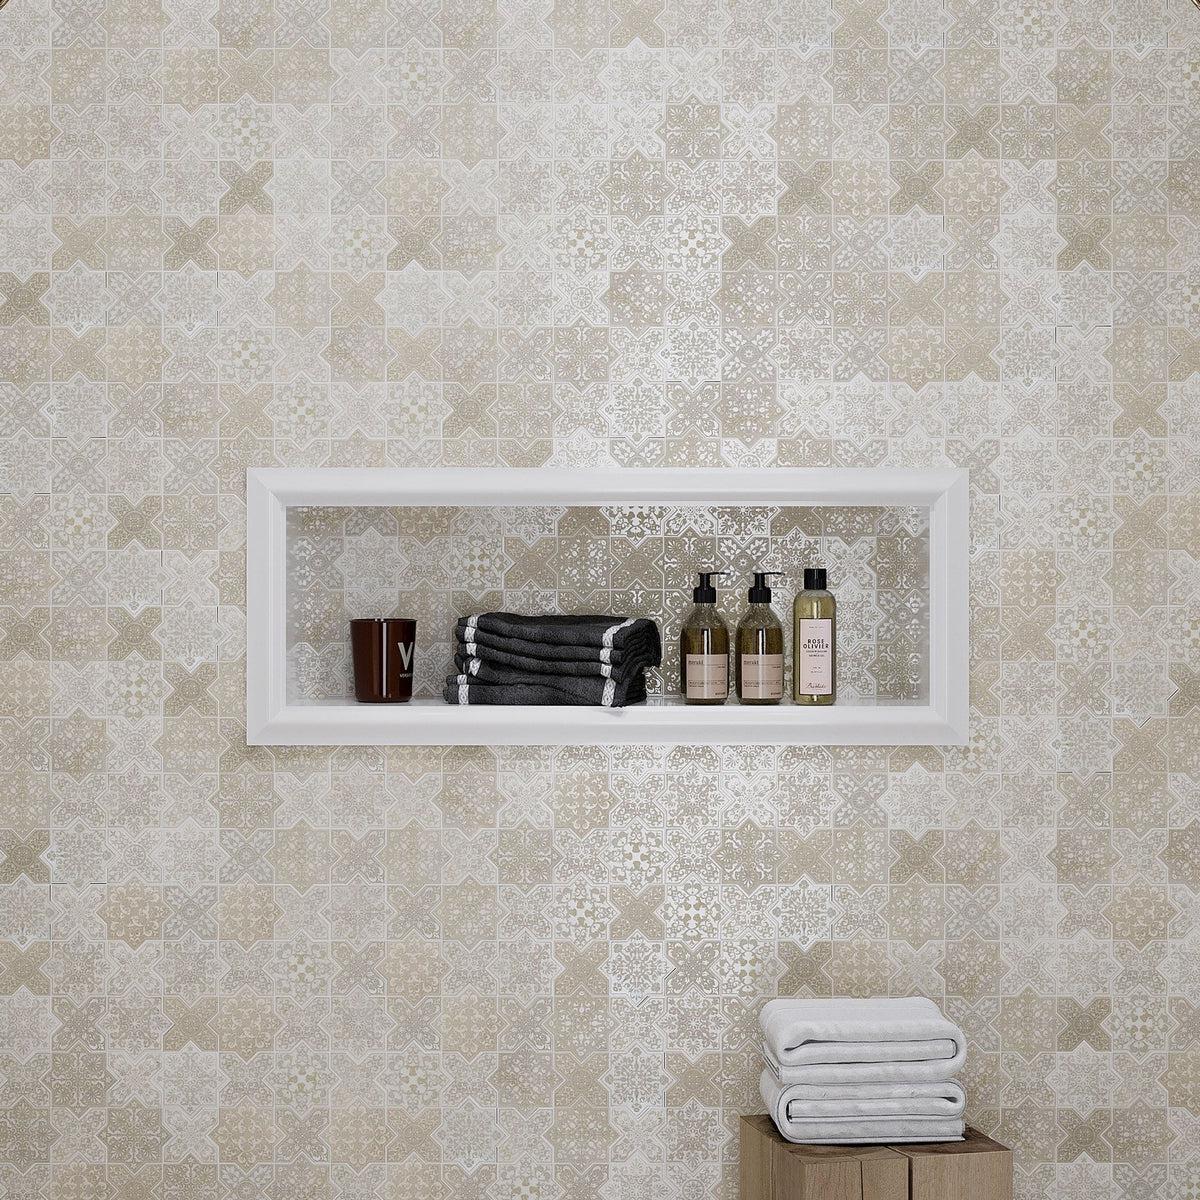 Cream Moroccan bathroom tile shower niche